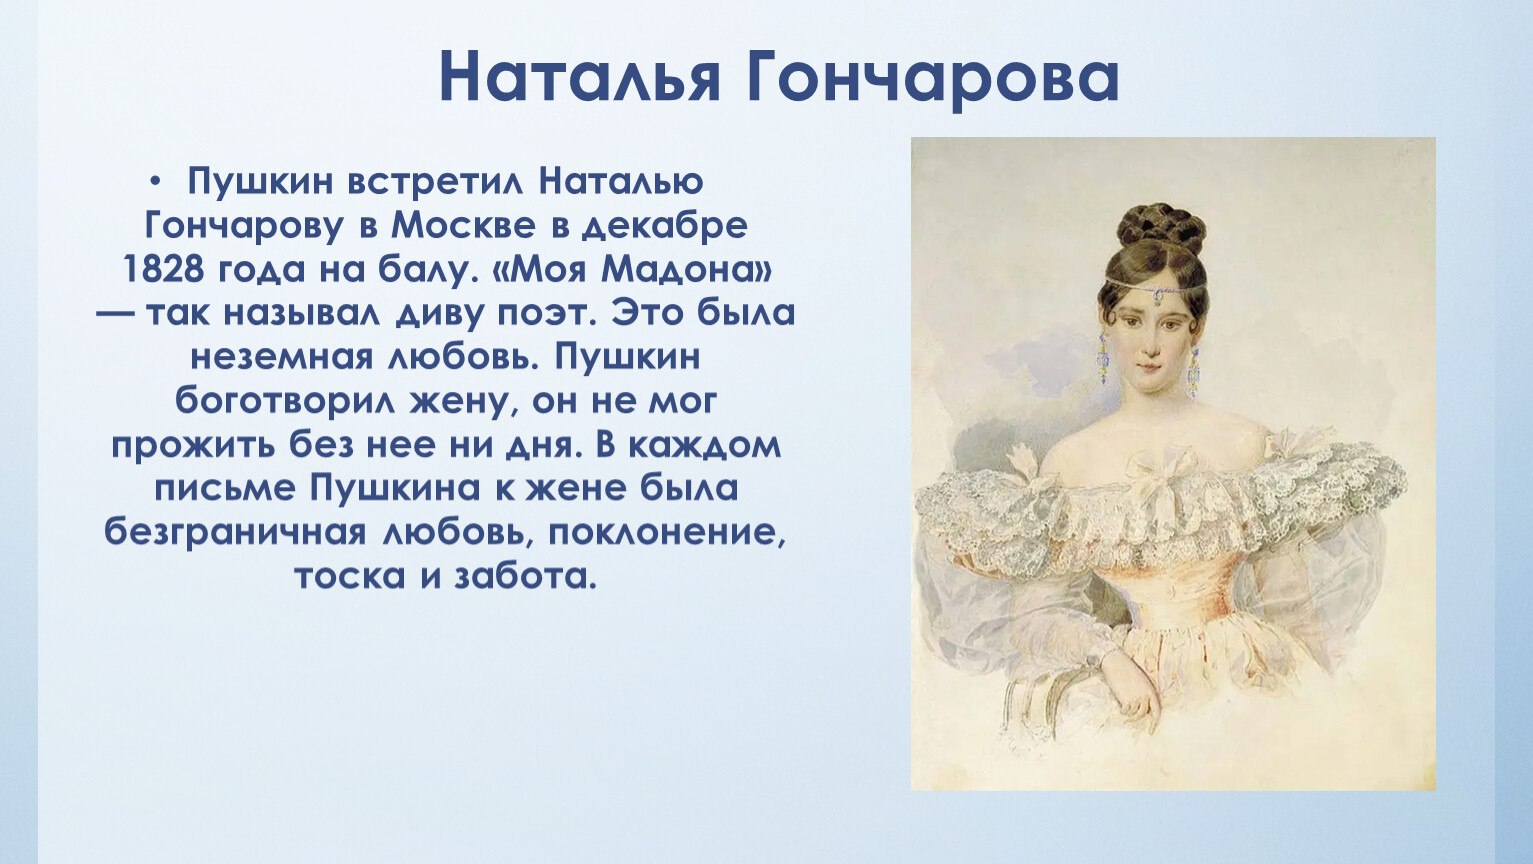 Когда женился пушкин. Н Гончарова и Пушкин. Образ Натальи Гончаровой невесты Пушкина.